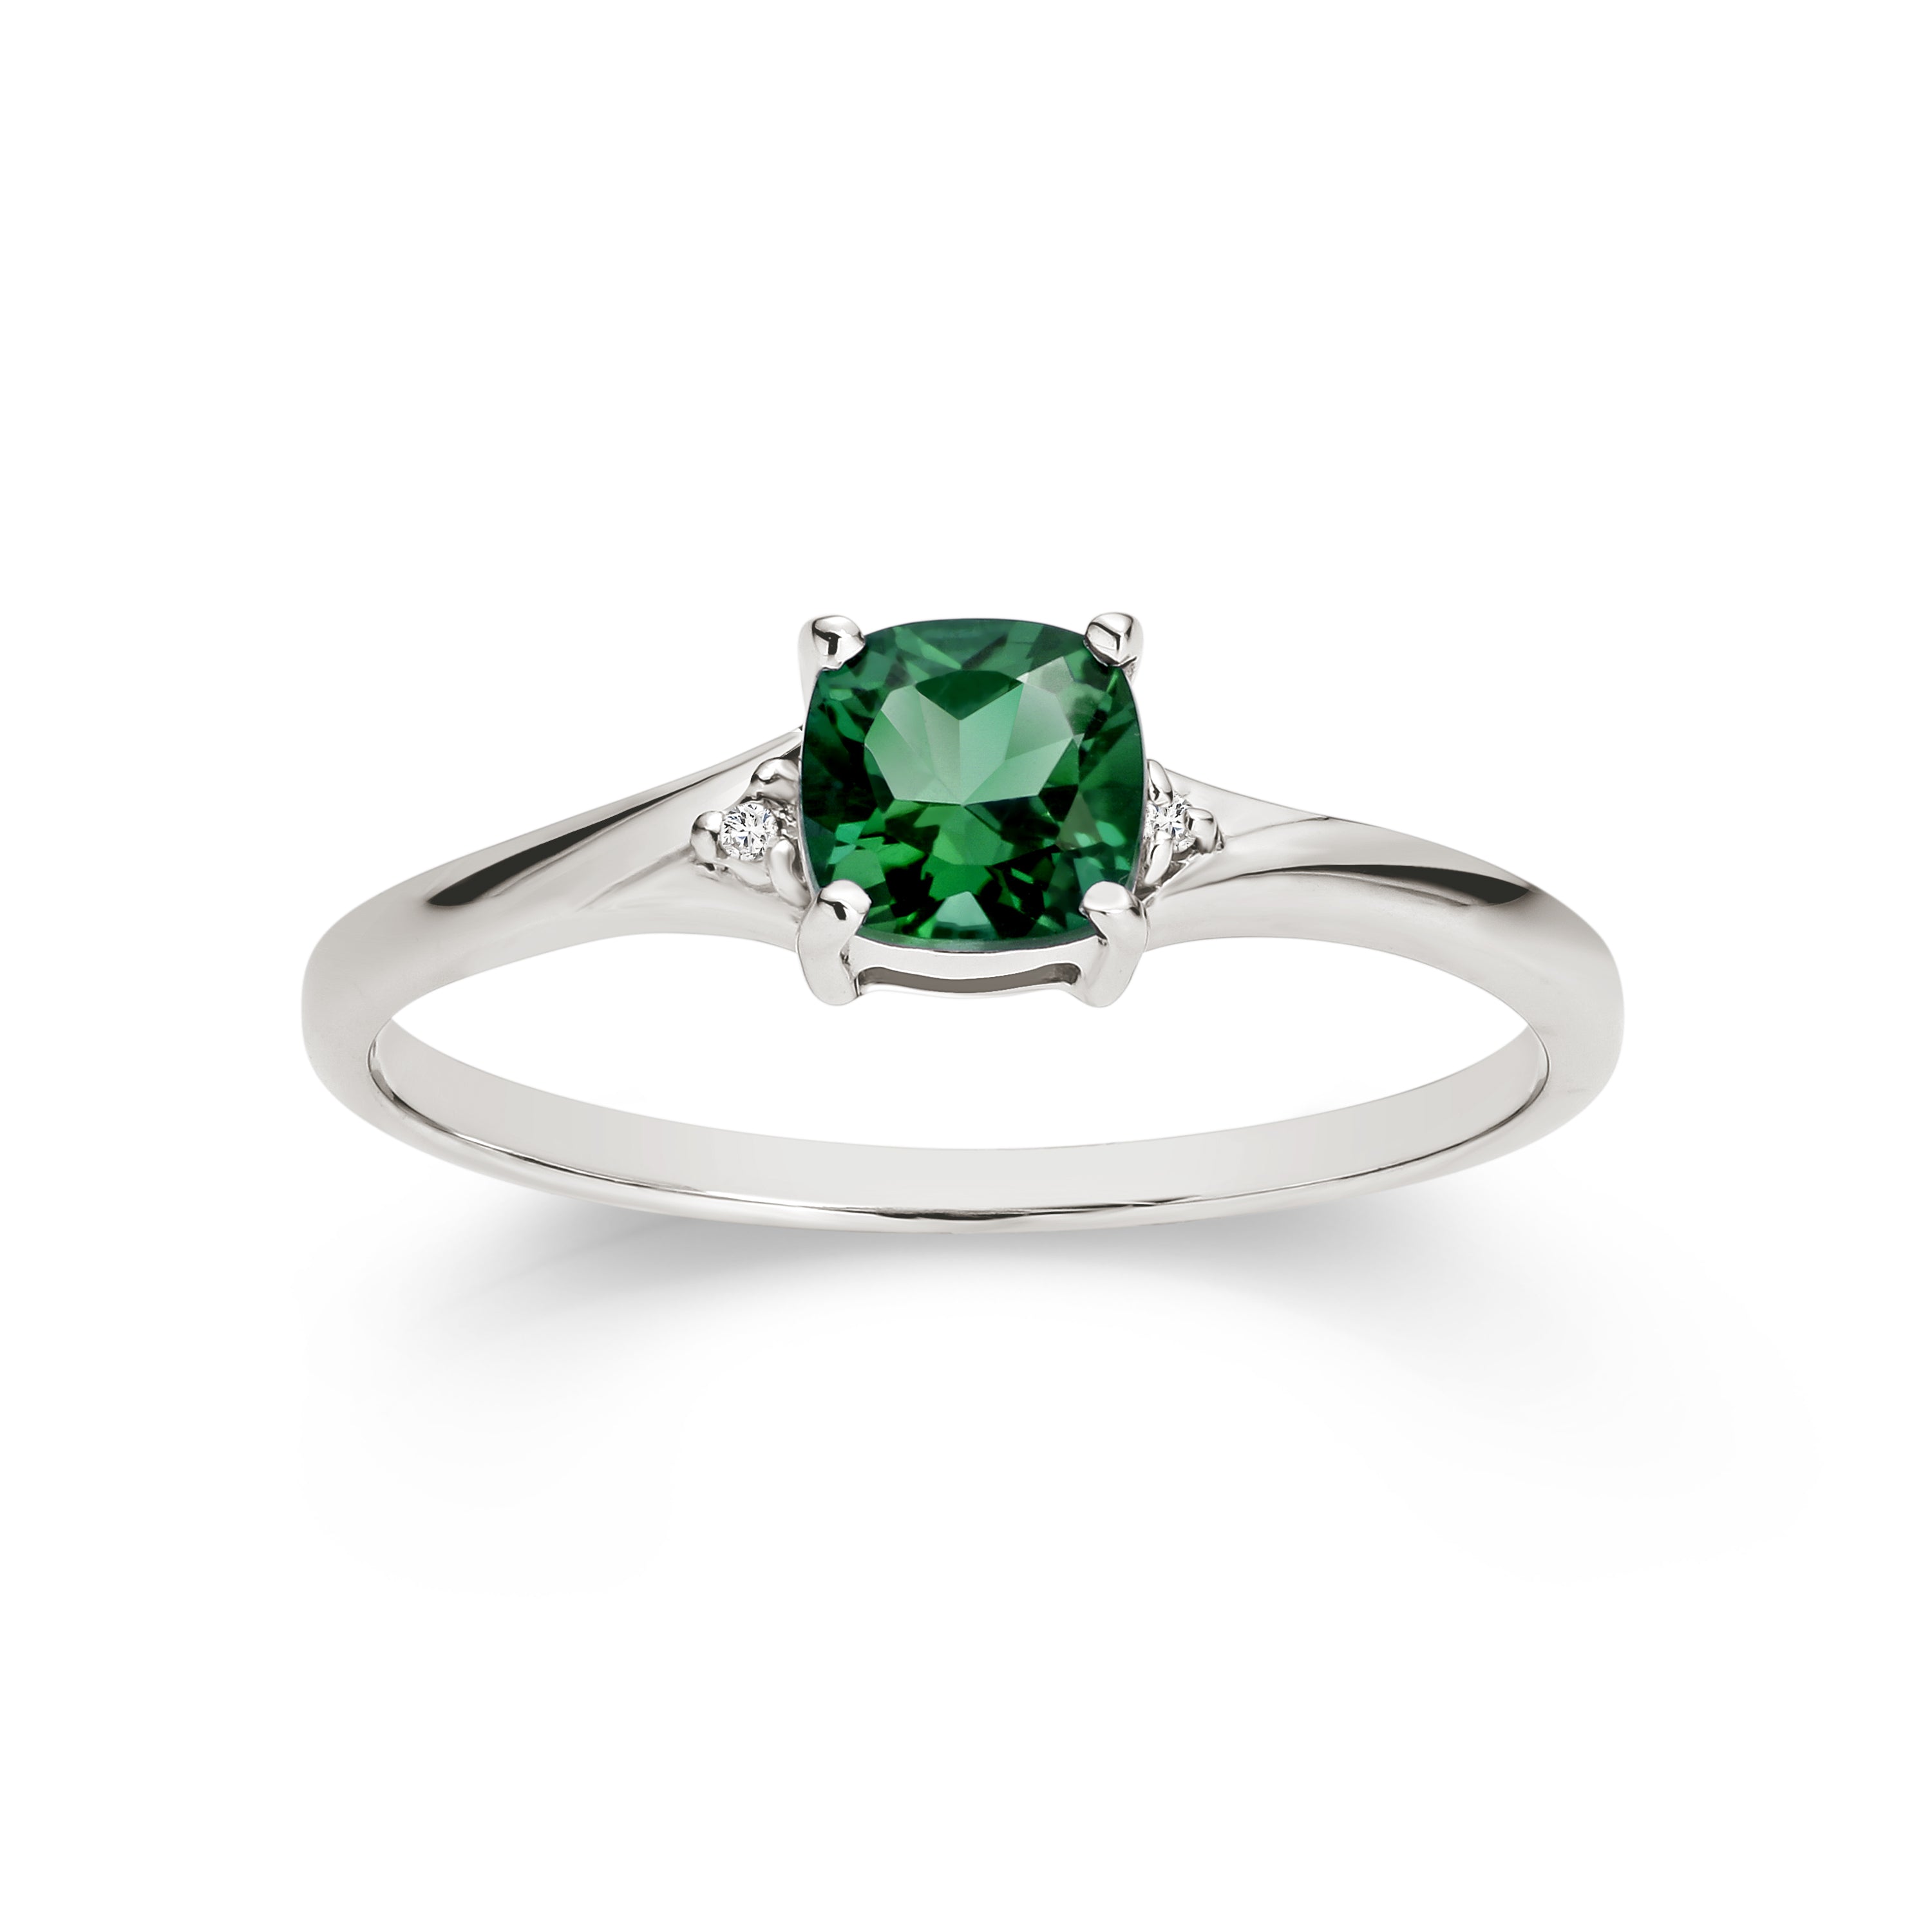 9ct white gold cr emerald & diamond ring